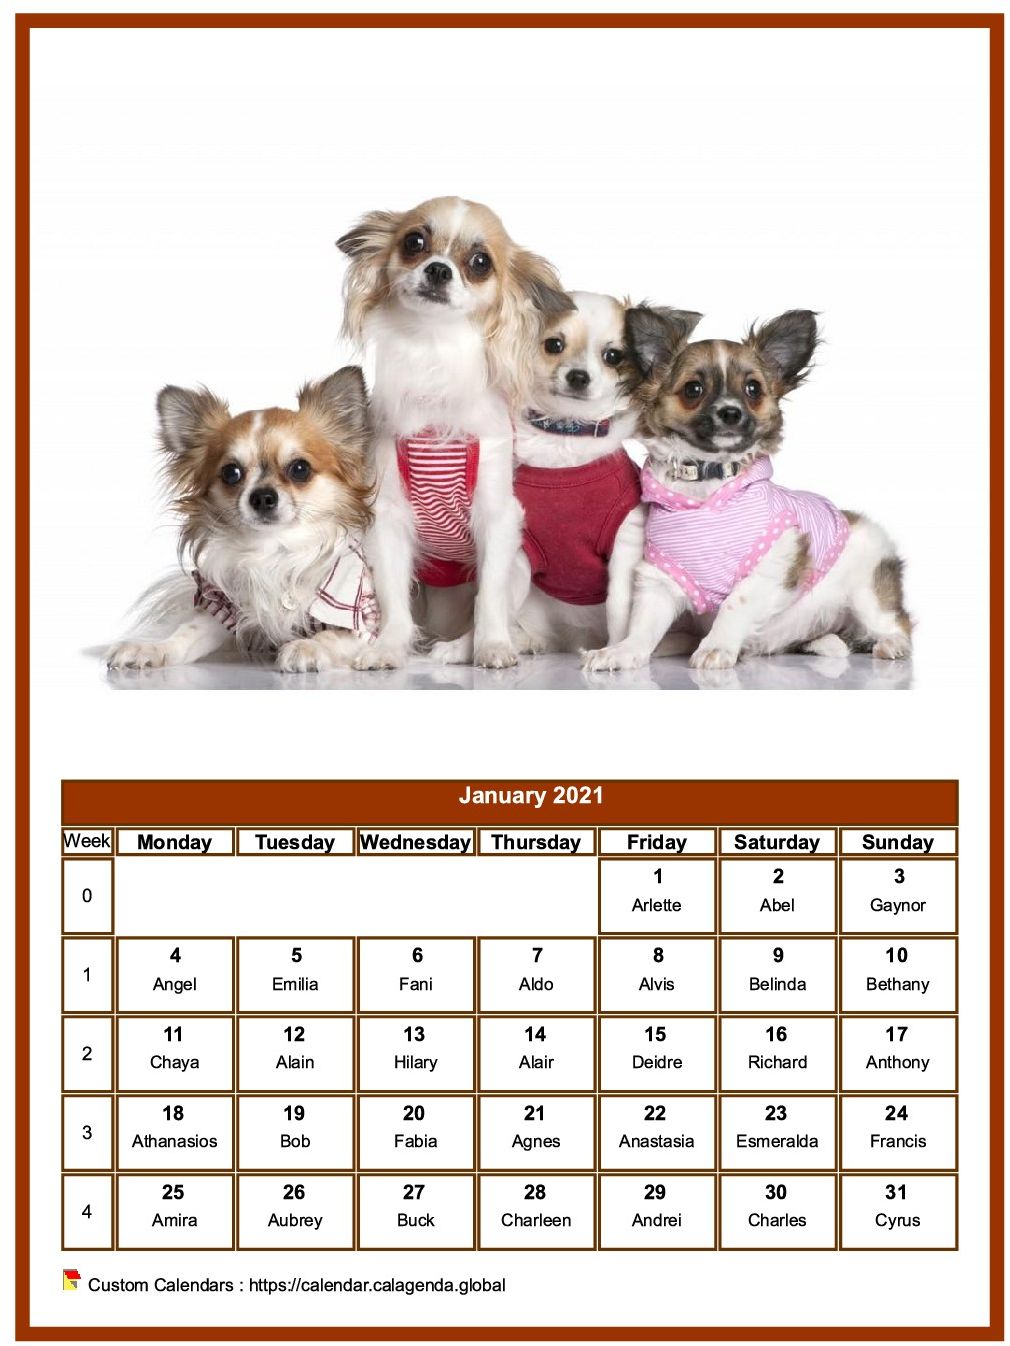 Calendar January 2021 dogs